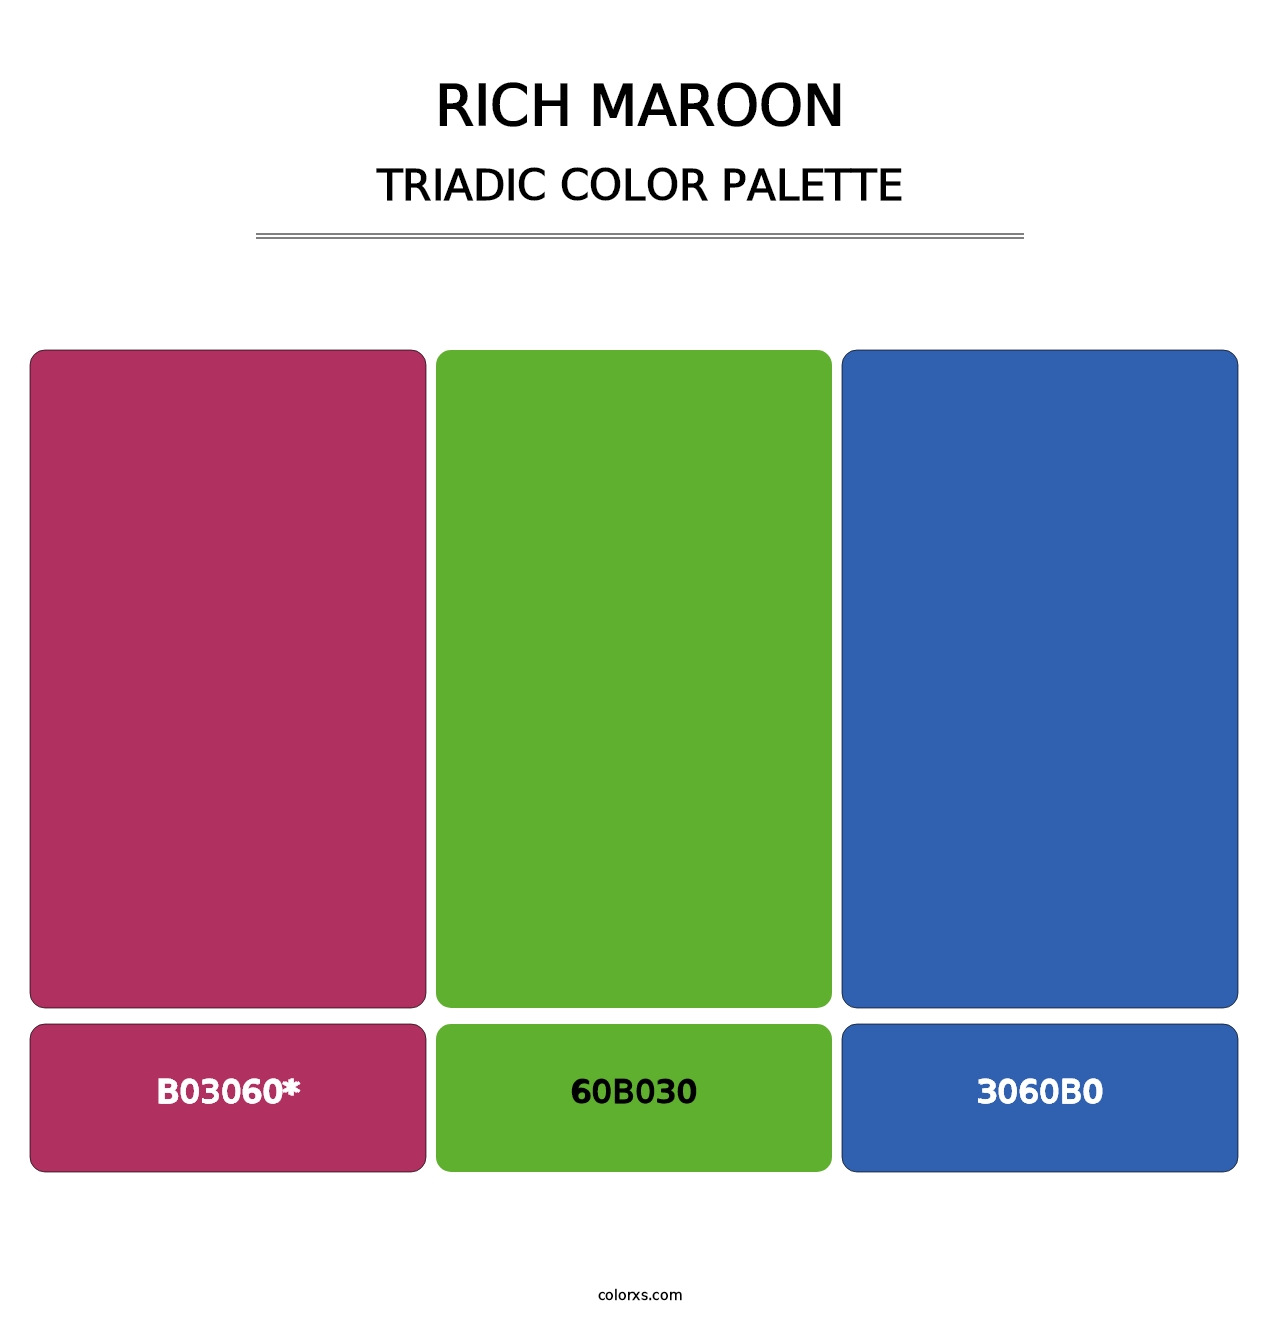 Rich Maroon - Triadic Color Palette